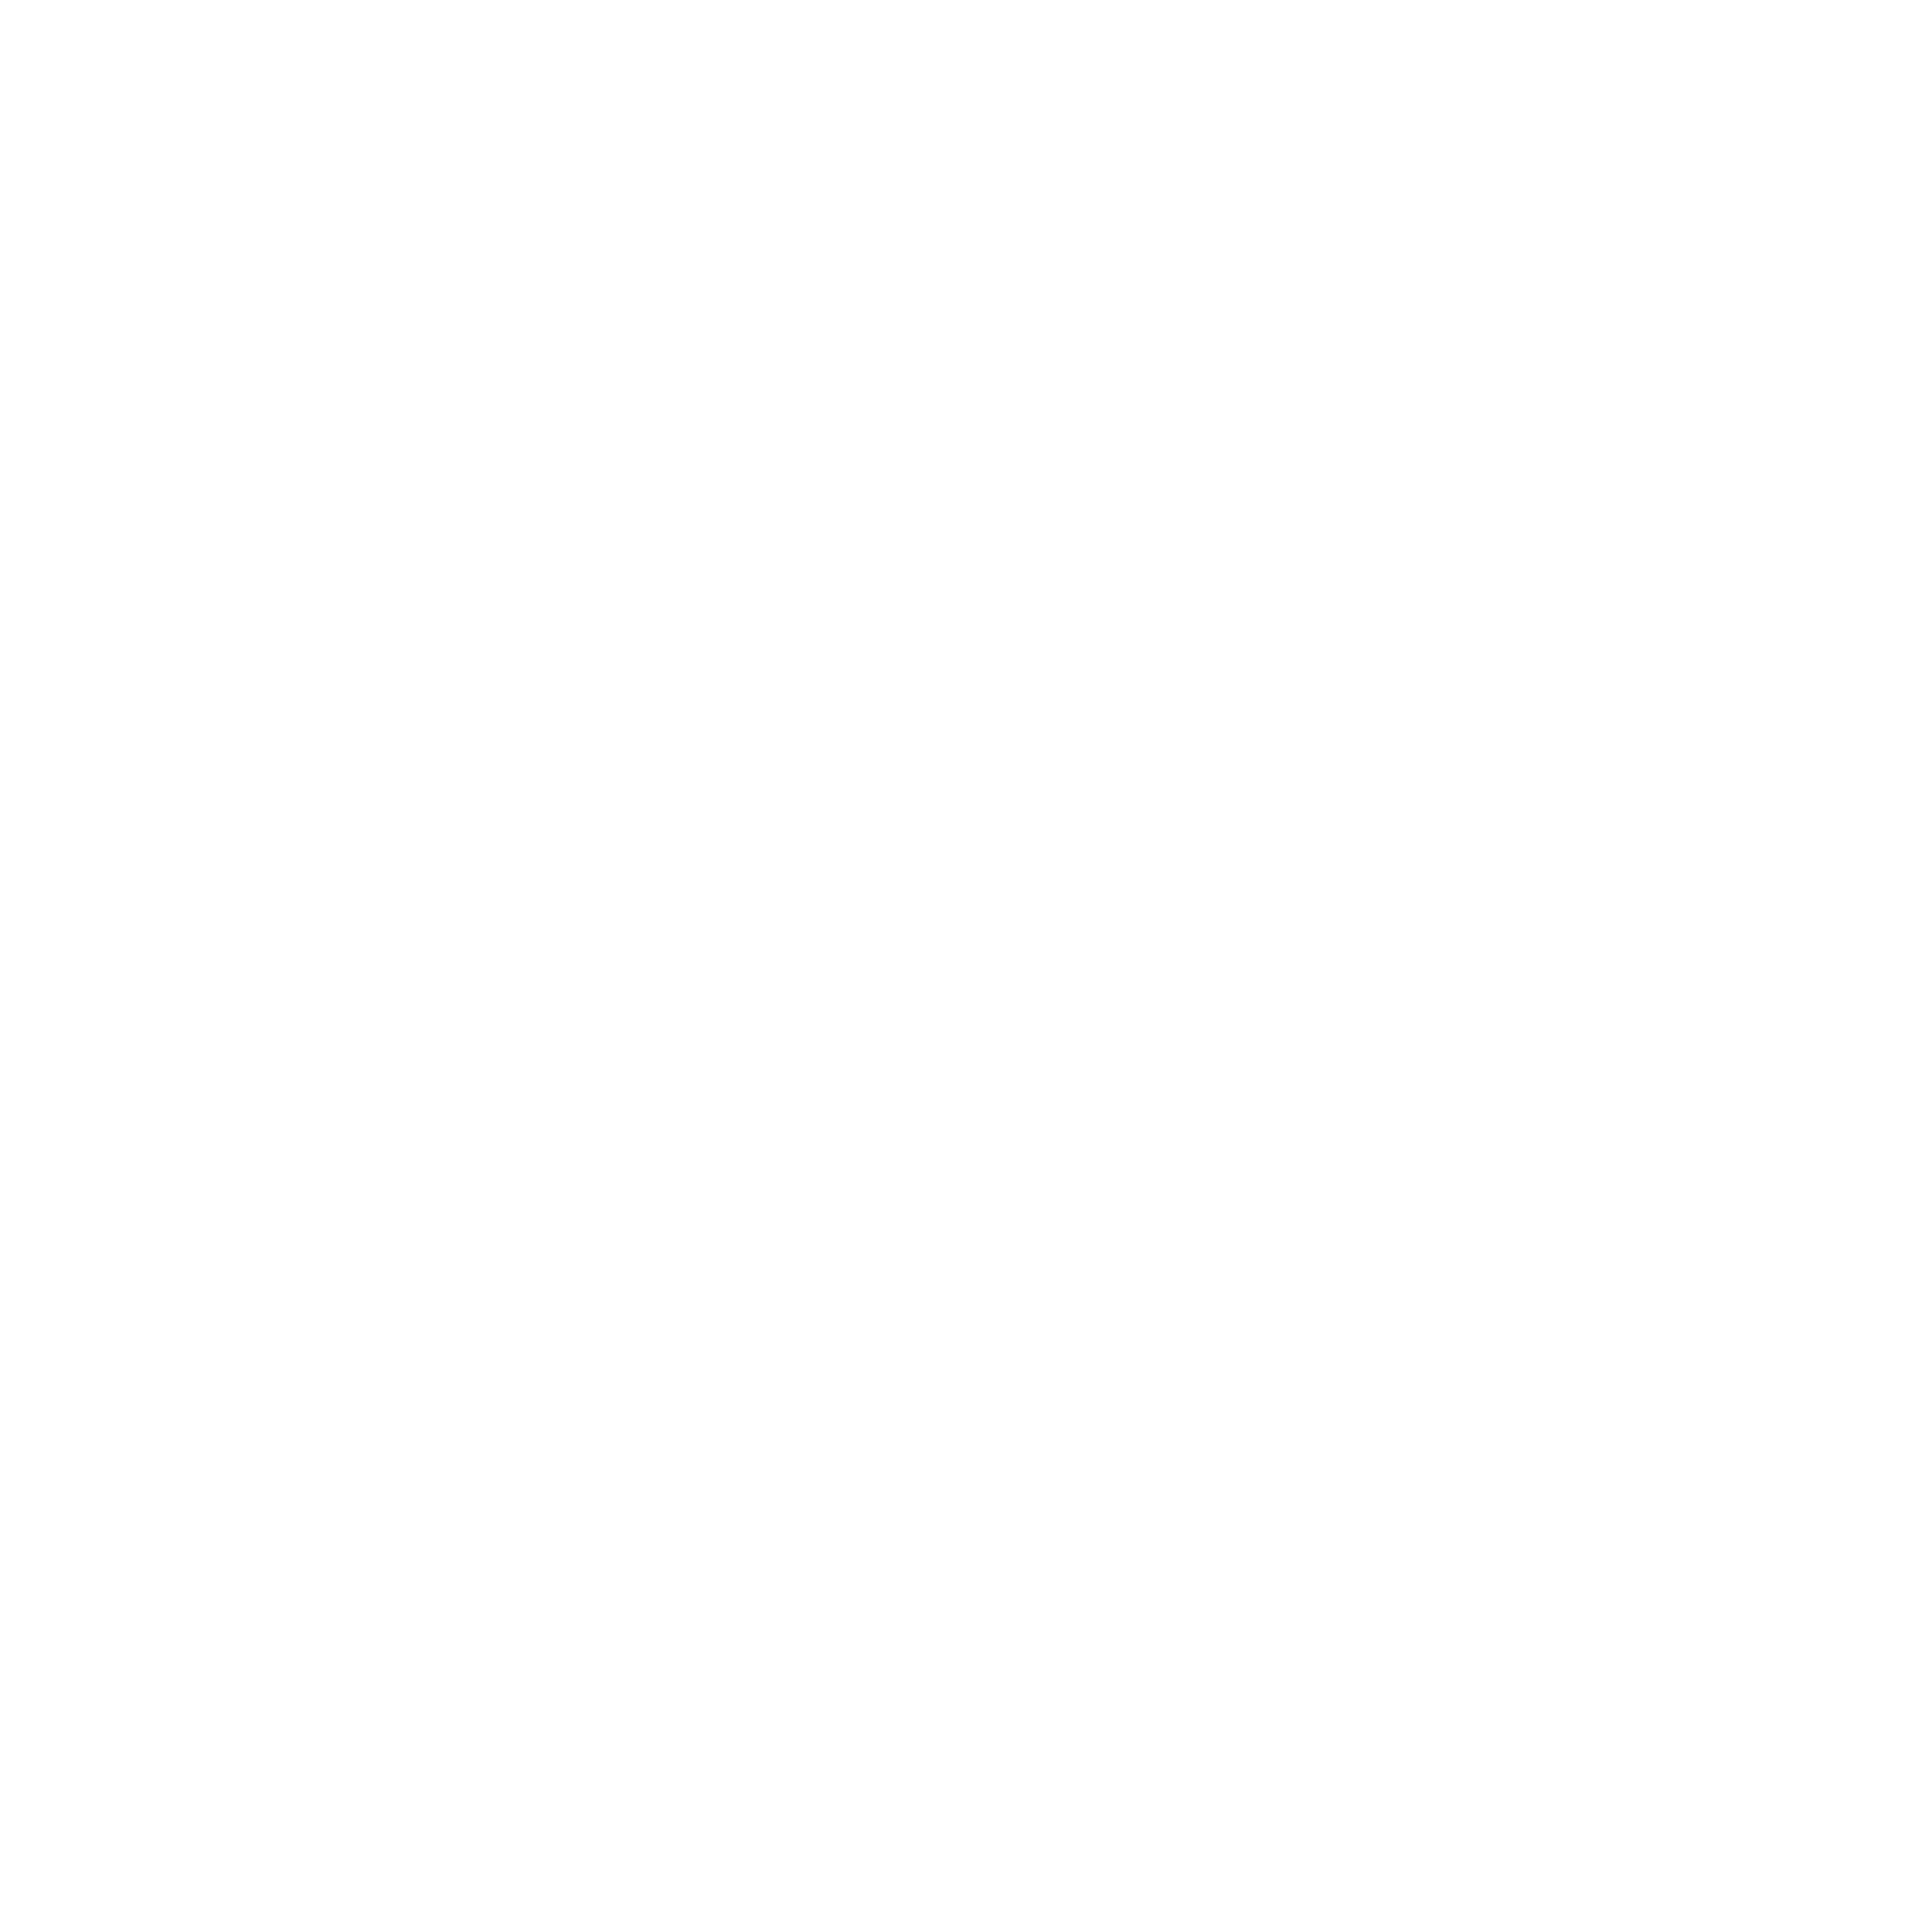 EBLS